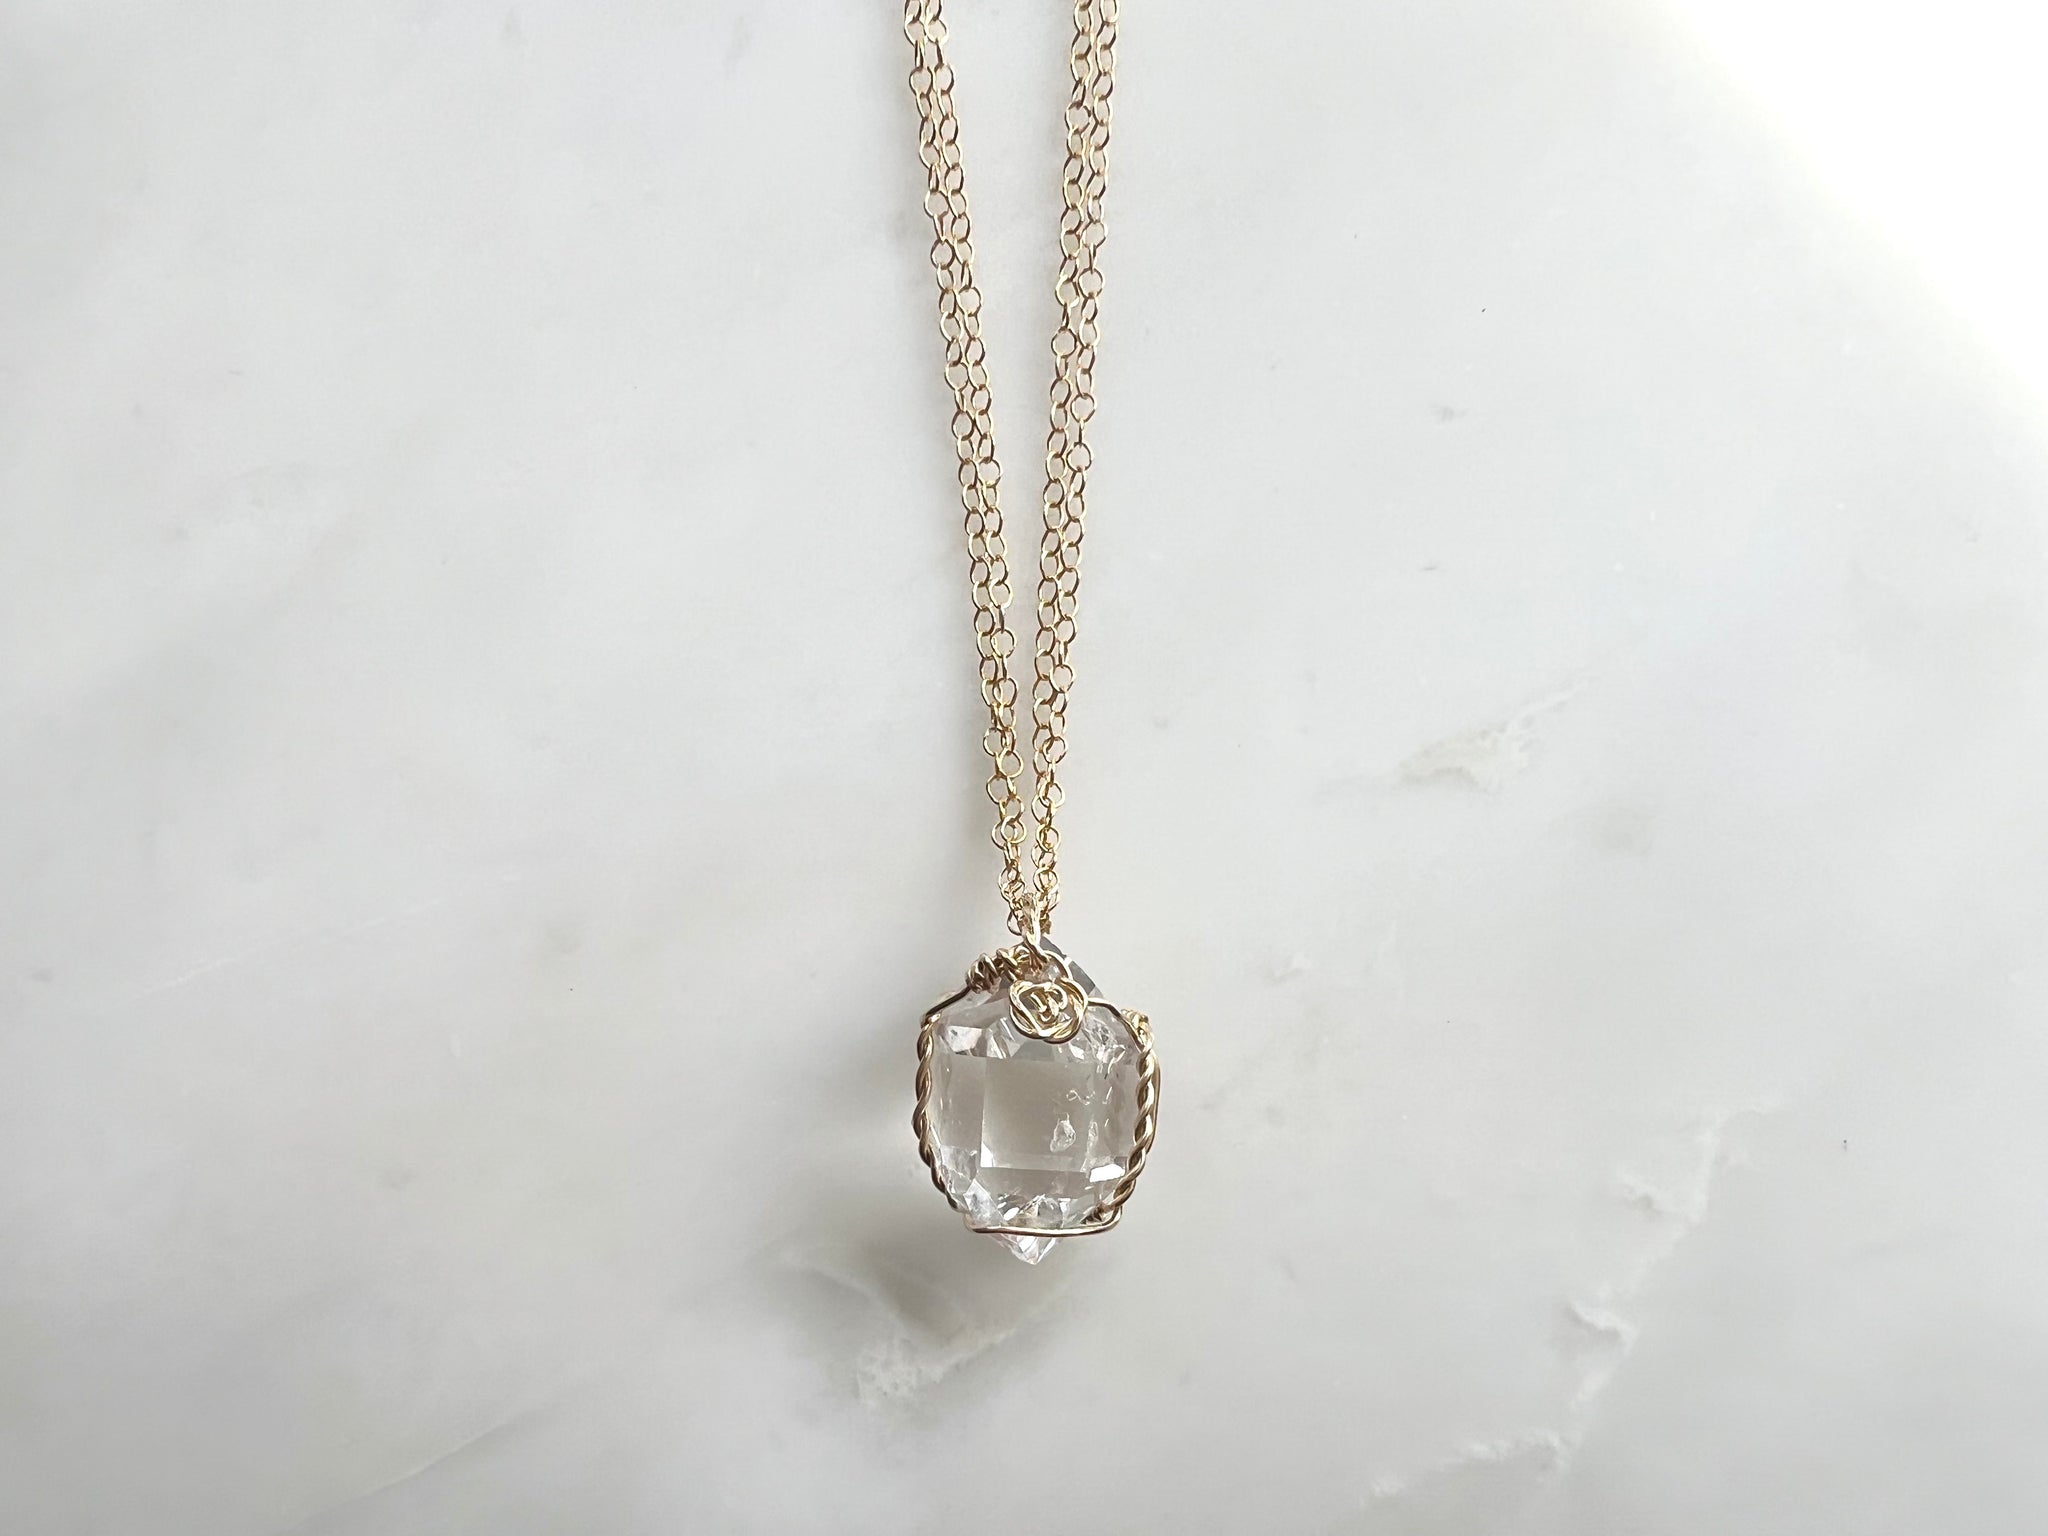 #3 Herkimer Diamond 6/8" Necklace 14K Gold Filled / ハーキマーダイアモンド 6/8" ネックレス 14Kゴールドフィルド